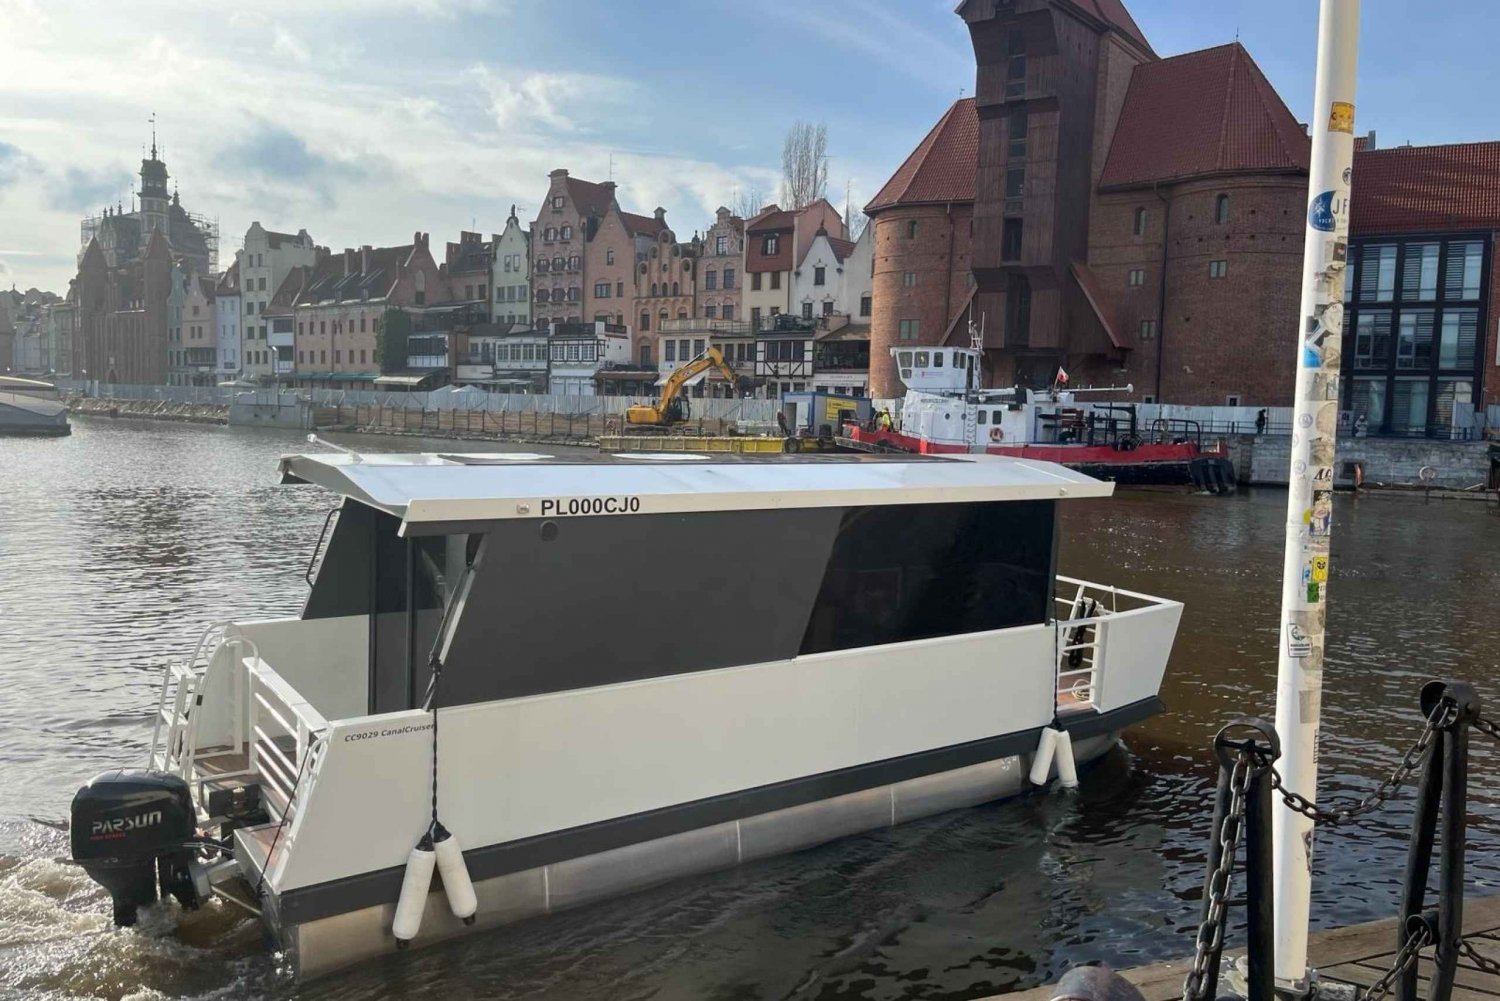 Brand New - Tiny Party Boat - Houseboat by Motława in Gdańsk